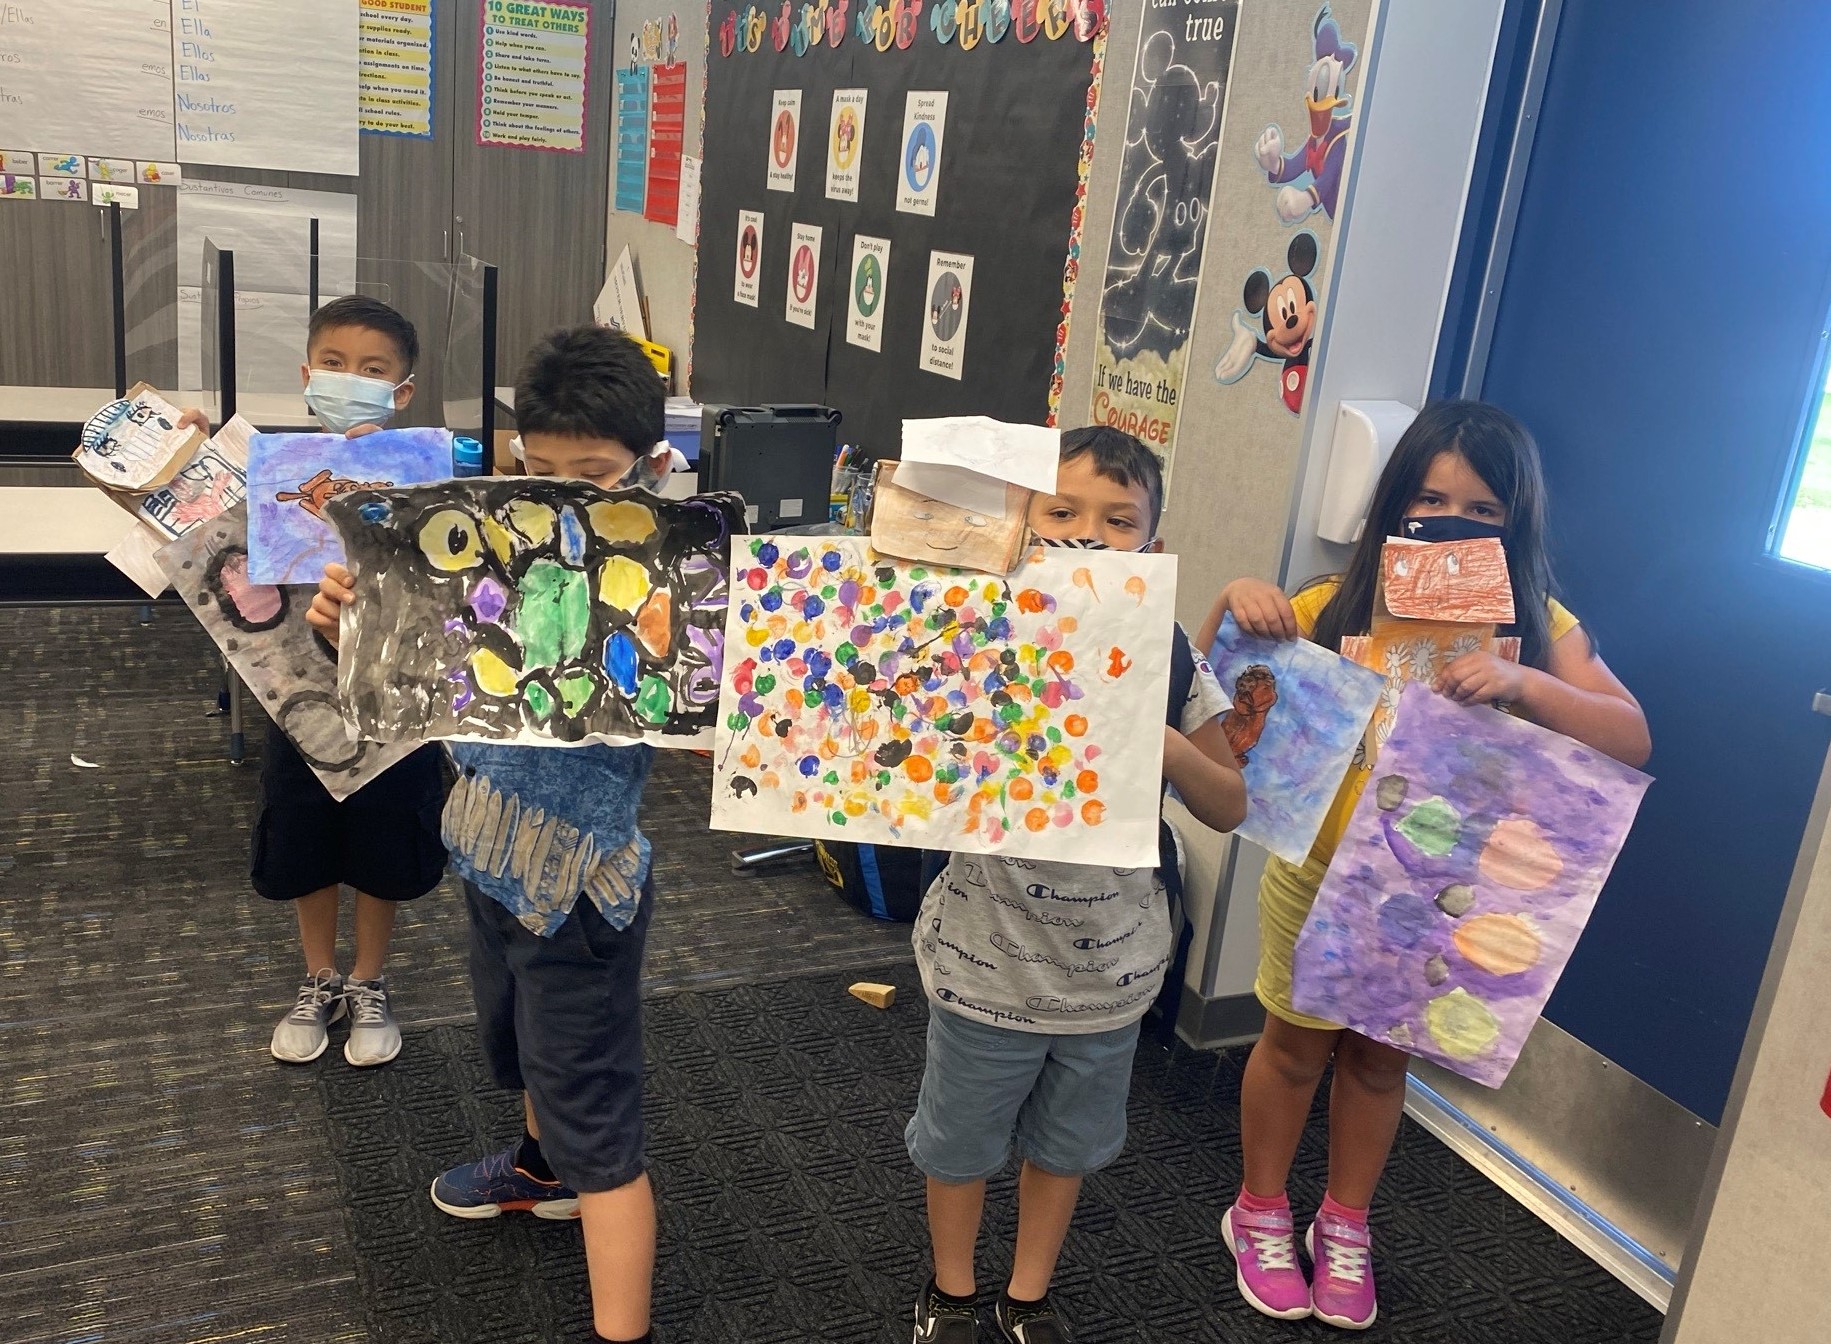 David Cuesta's students showing their artwork.